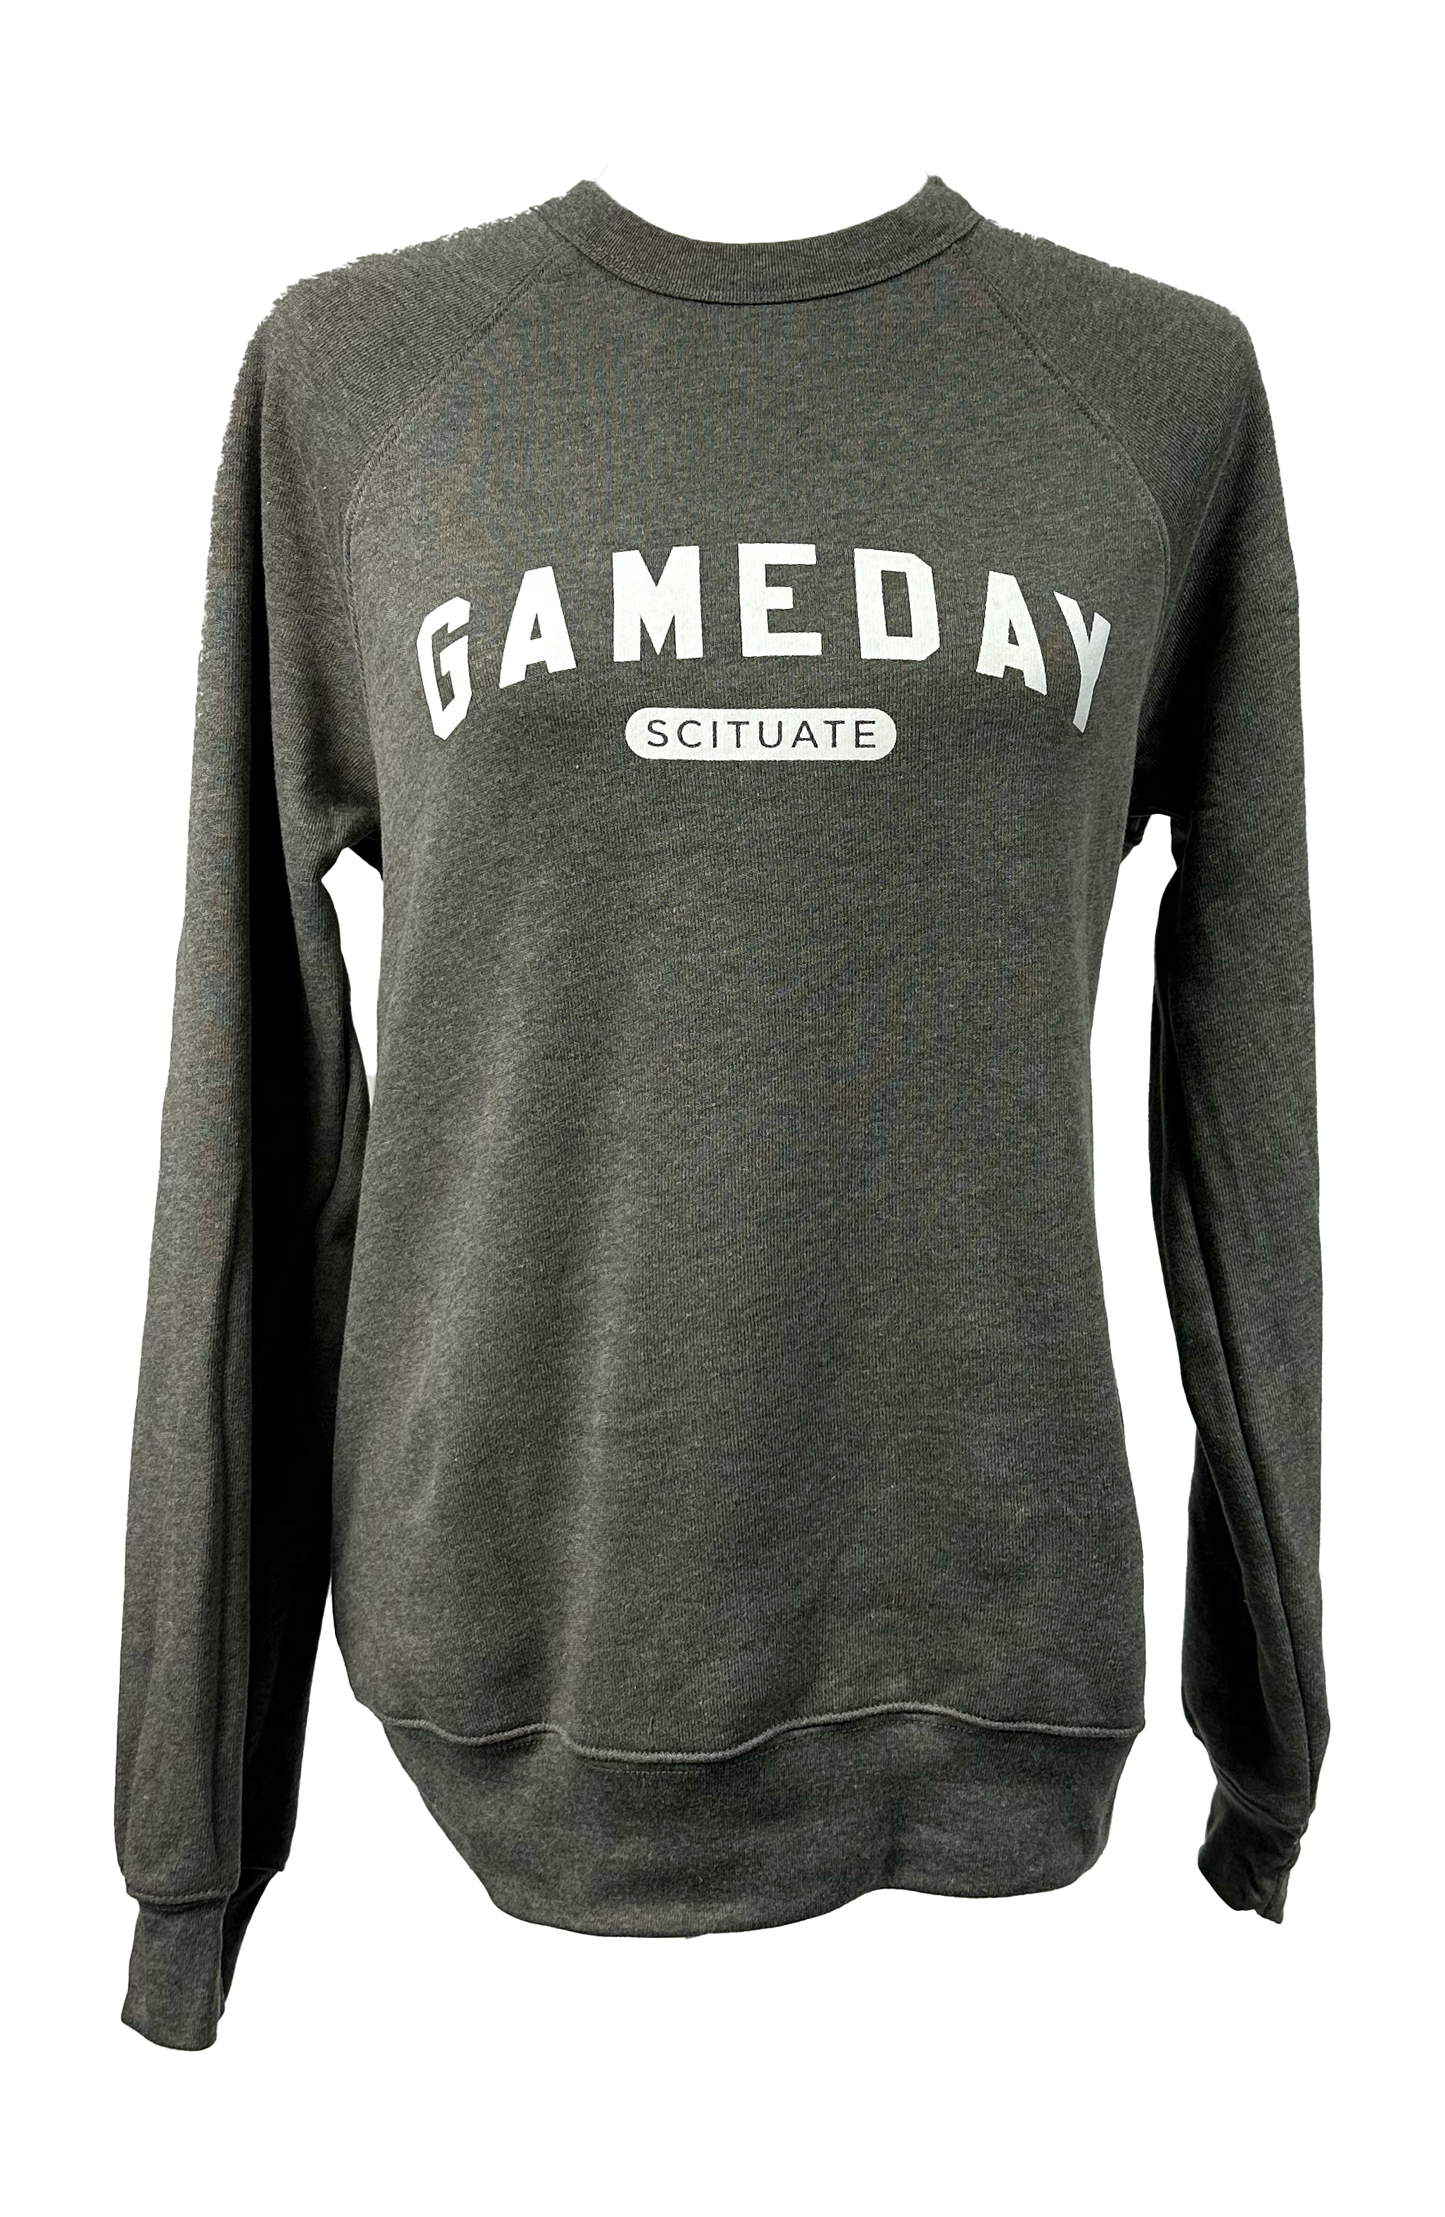 Scituate Gameday Crewneck Sweatshirt